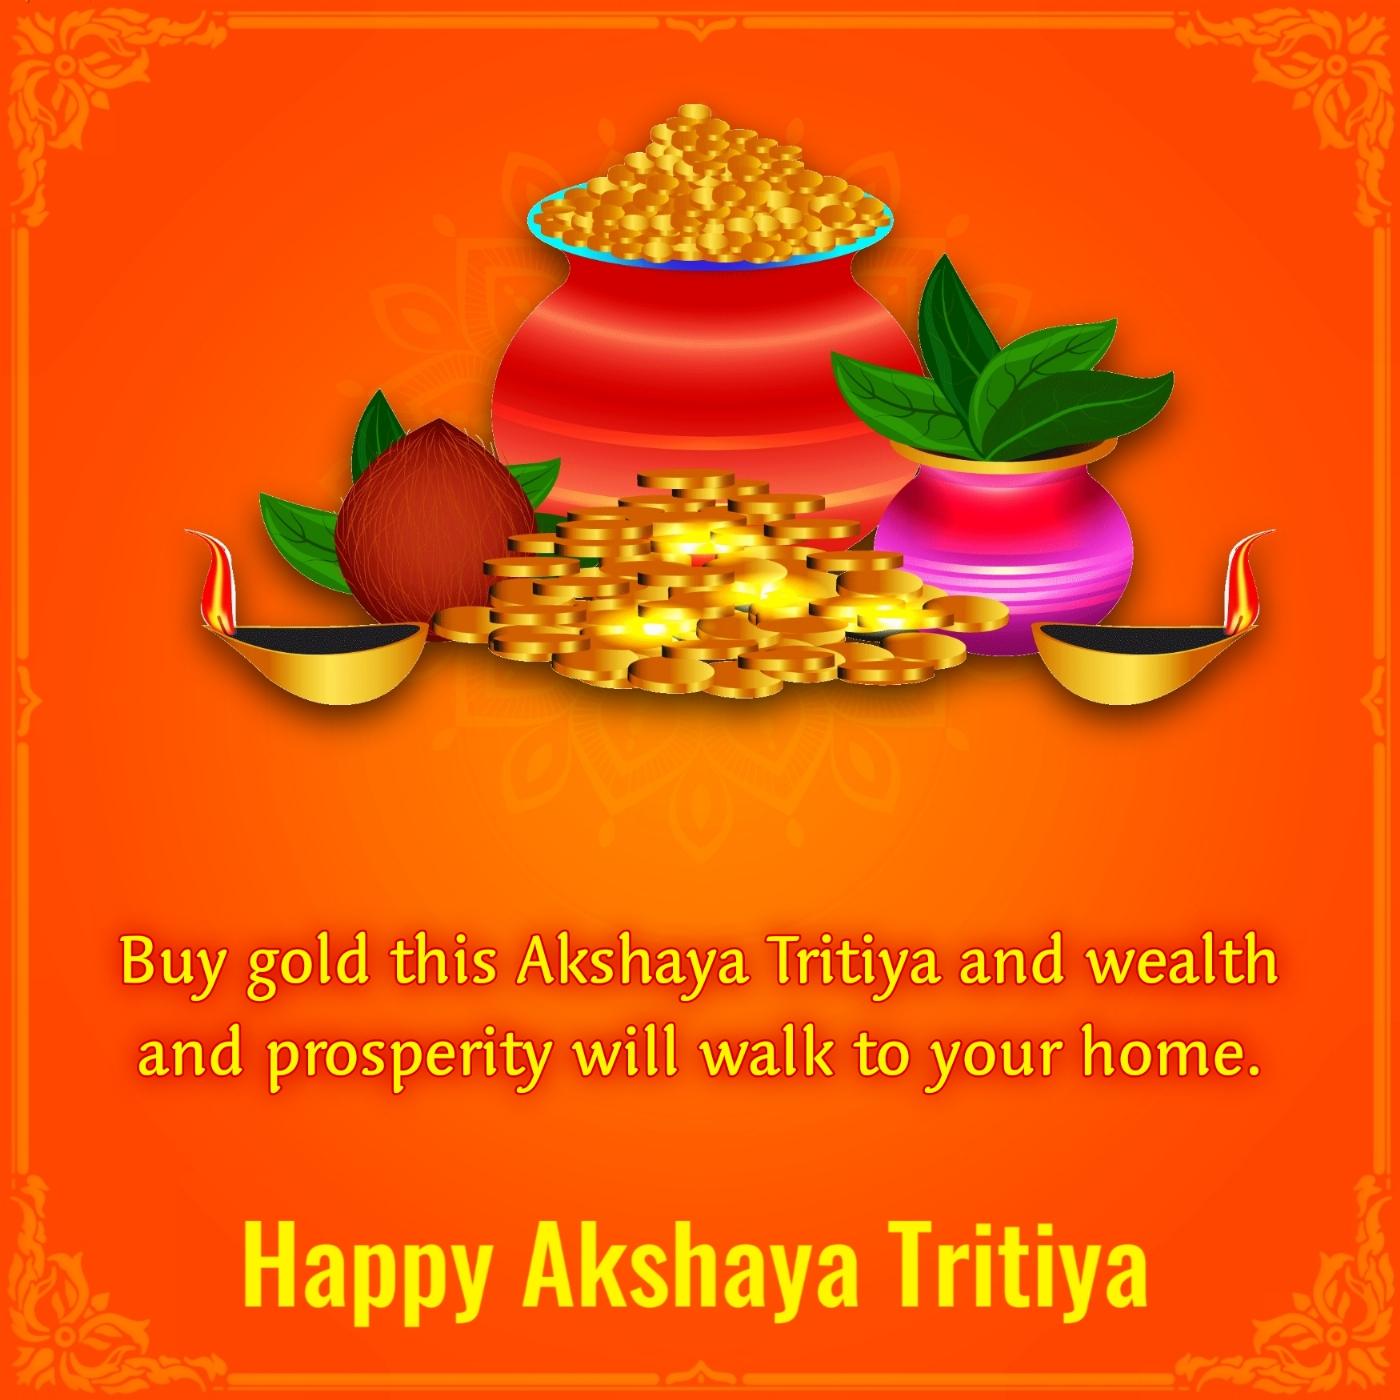 Buy gold this Akshaya Tritiya and wealth and prosperity